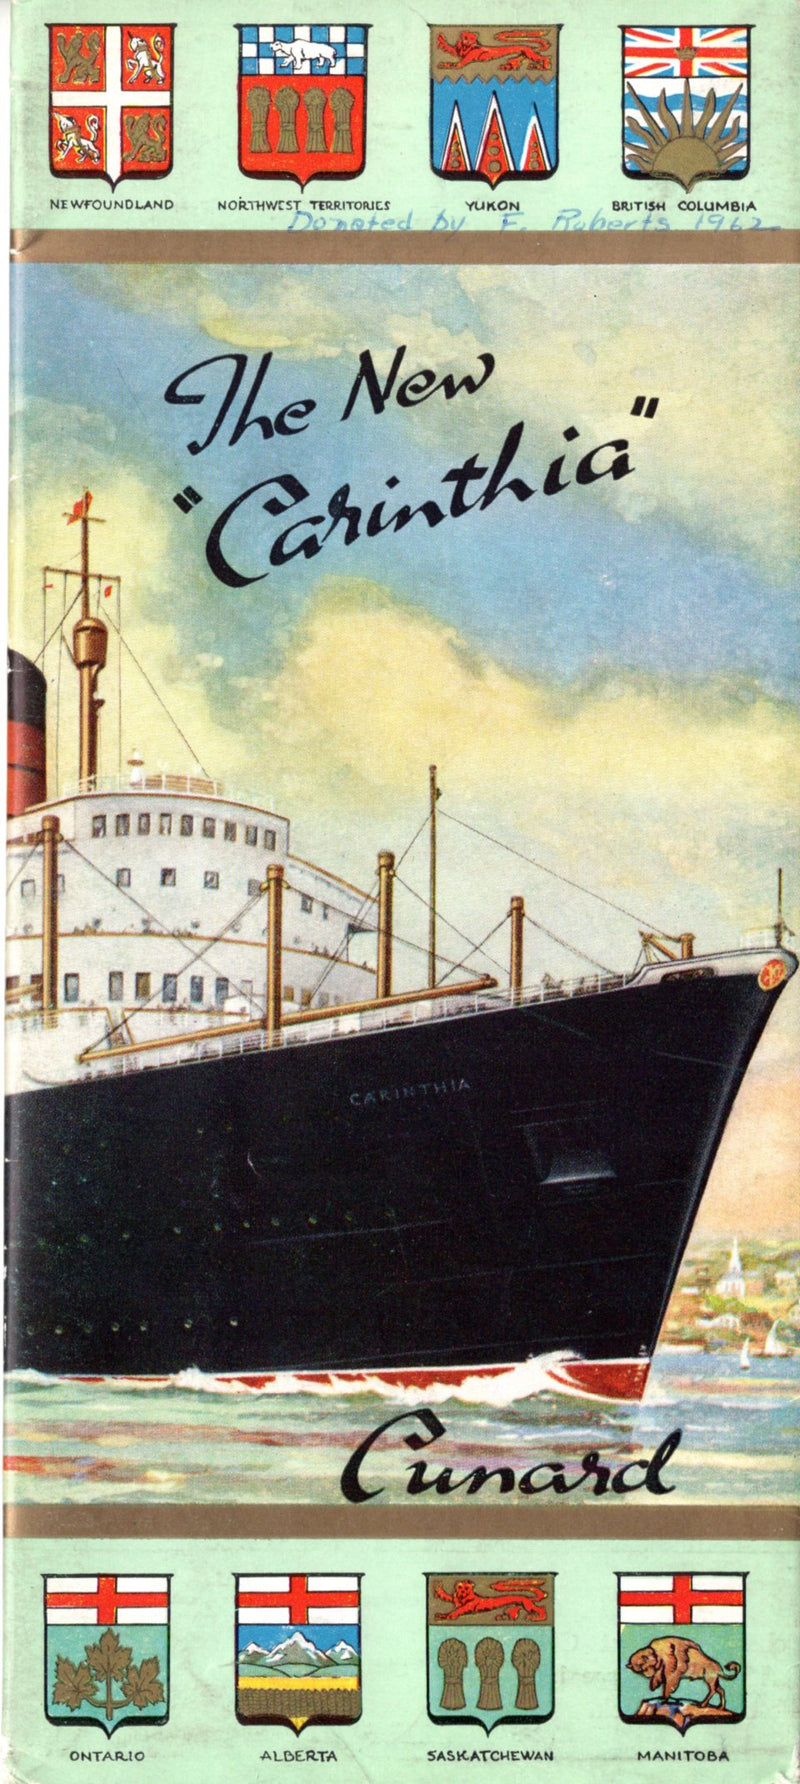 CARINTHIA: 1956 - Pre-maiden voyage interiors brochure